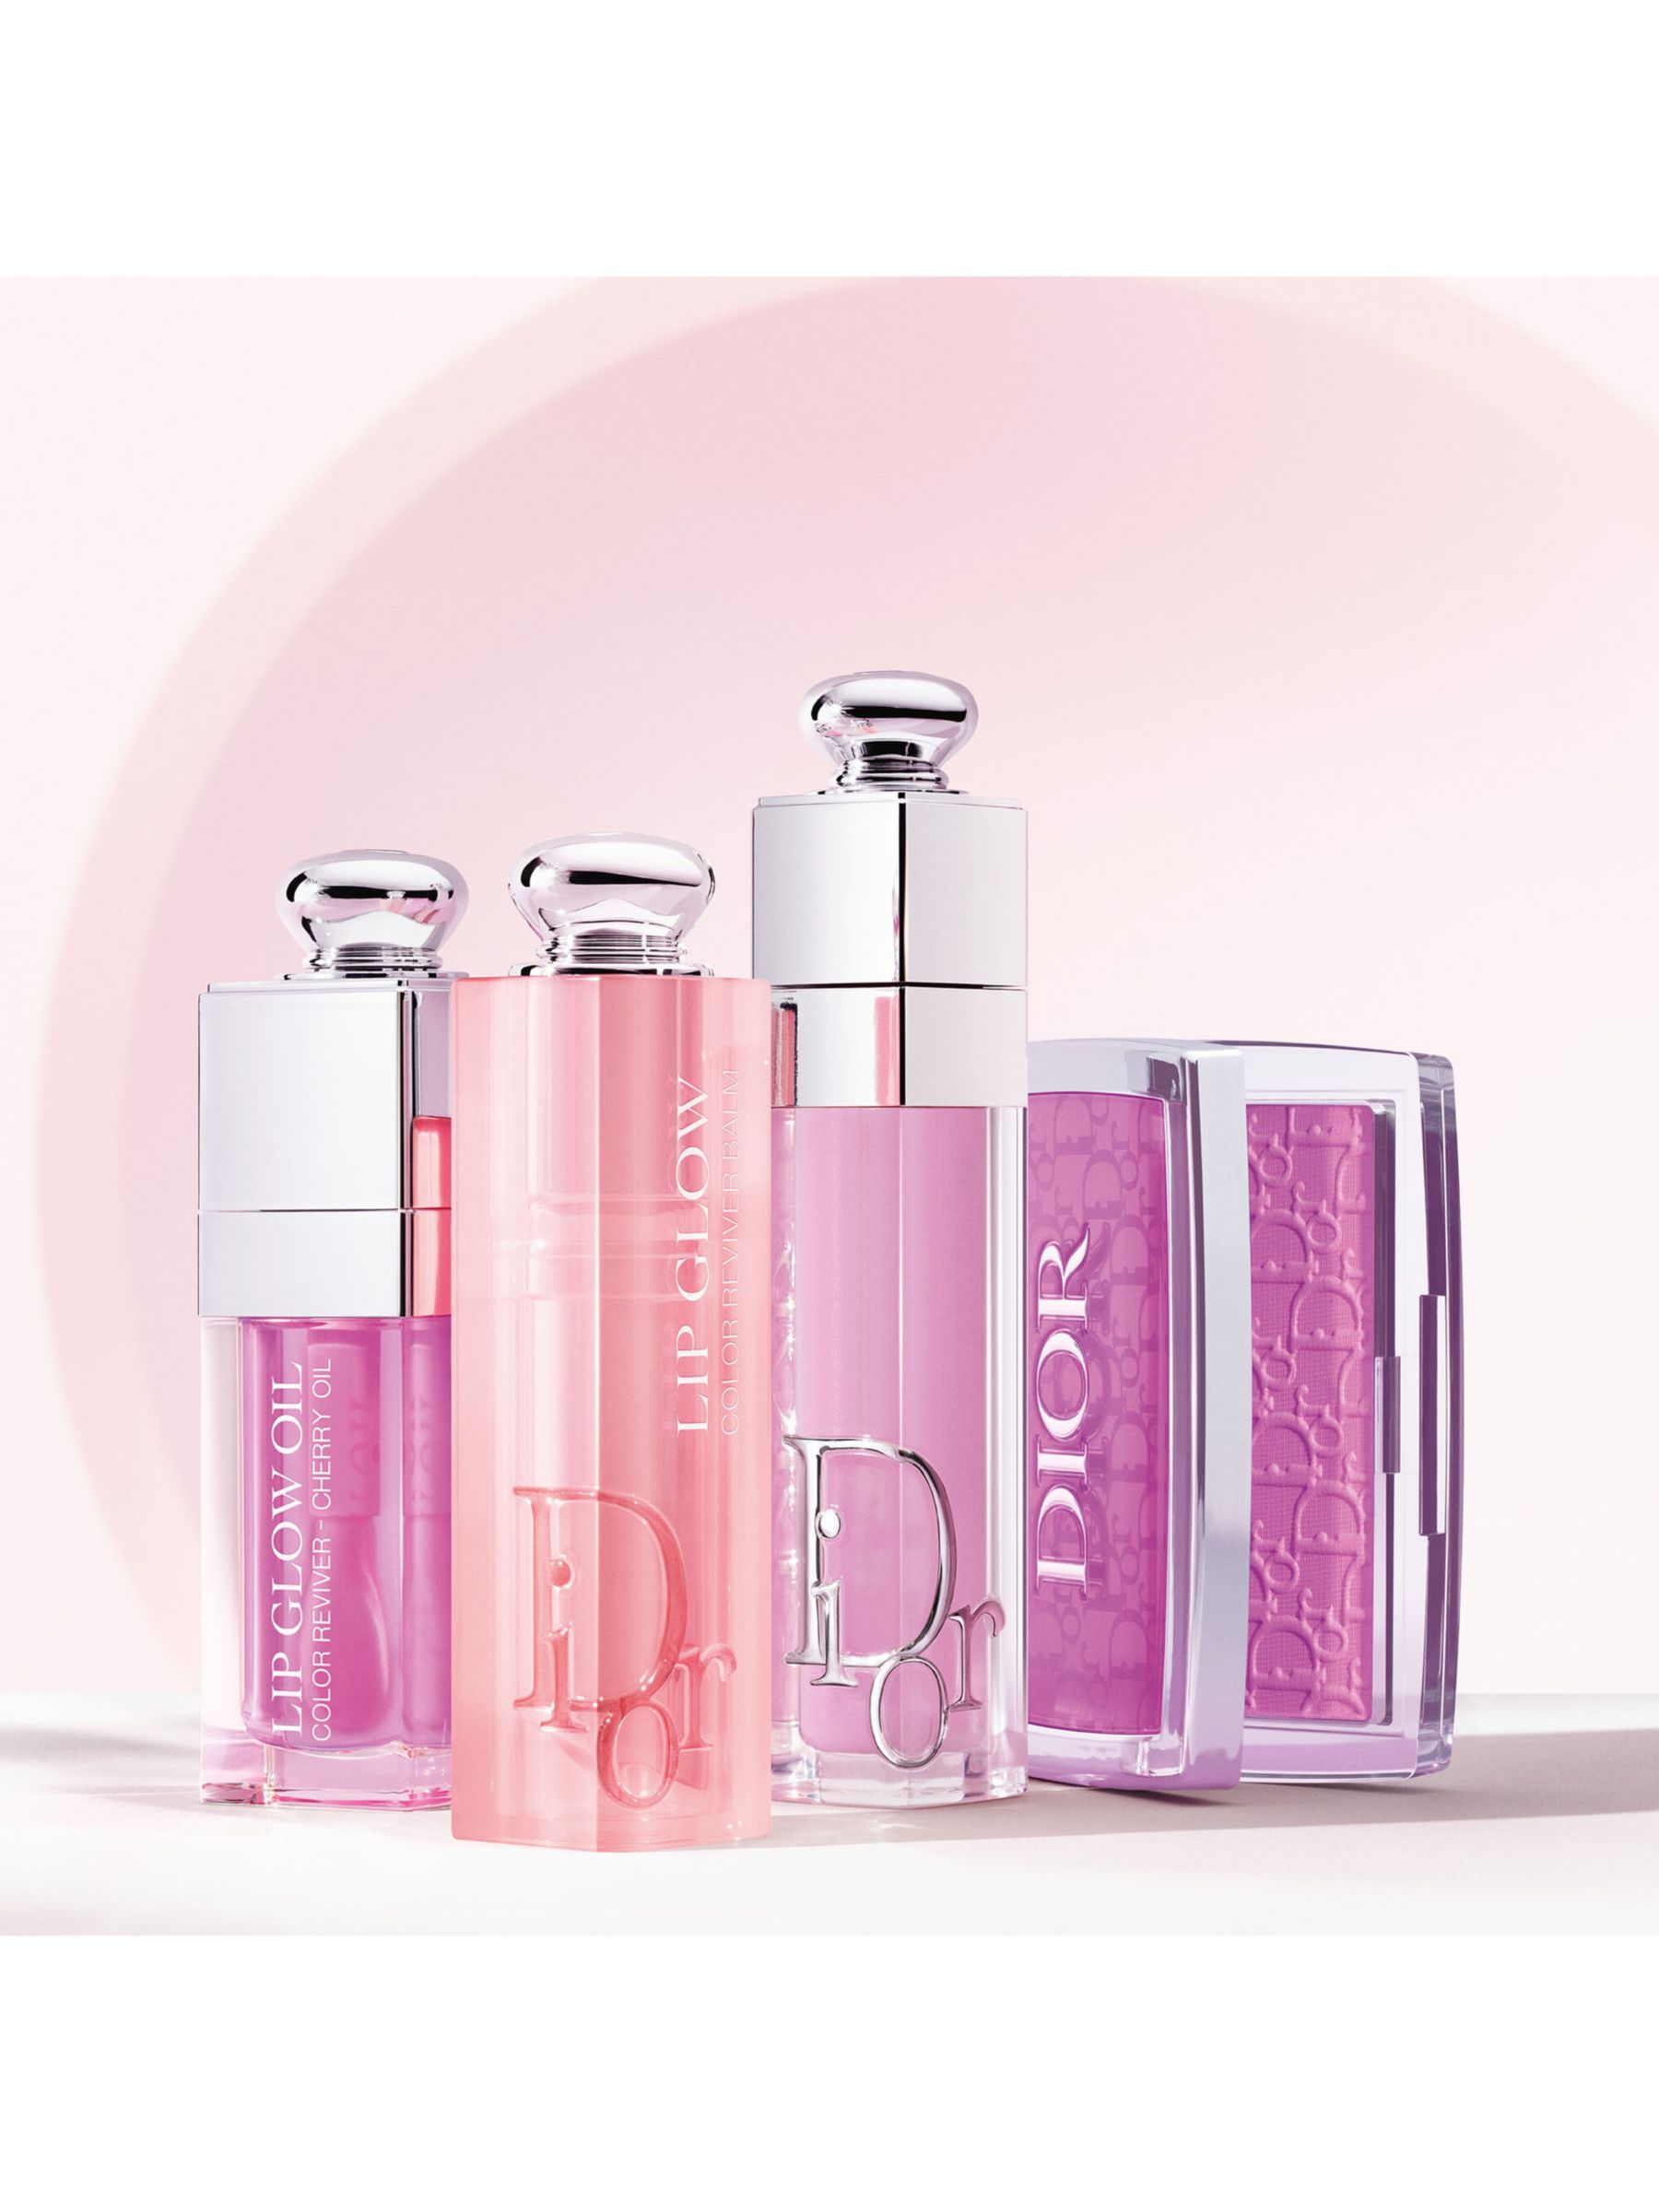 DIOR Limited Edition Addict Lip Maxmizer, 063 Pink Lilac